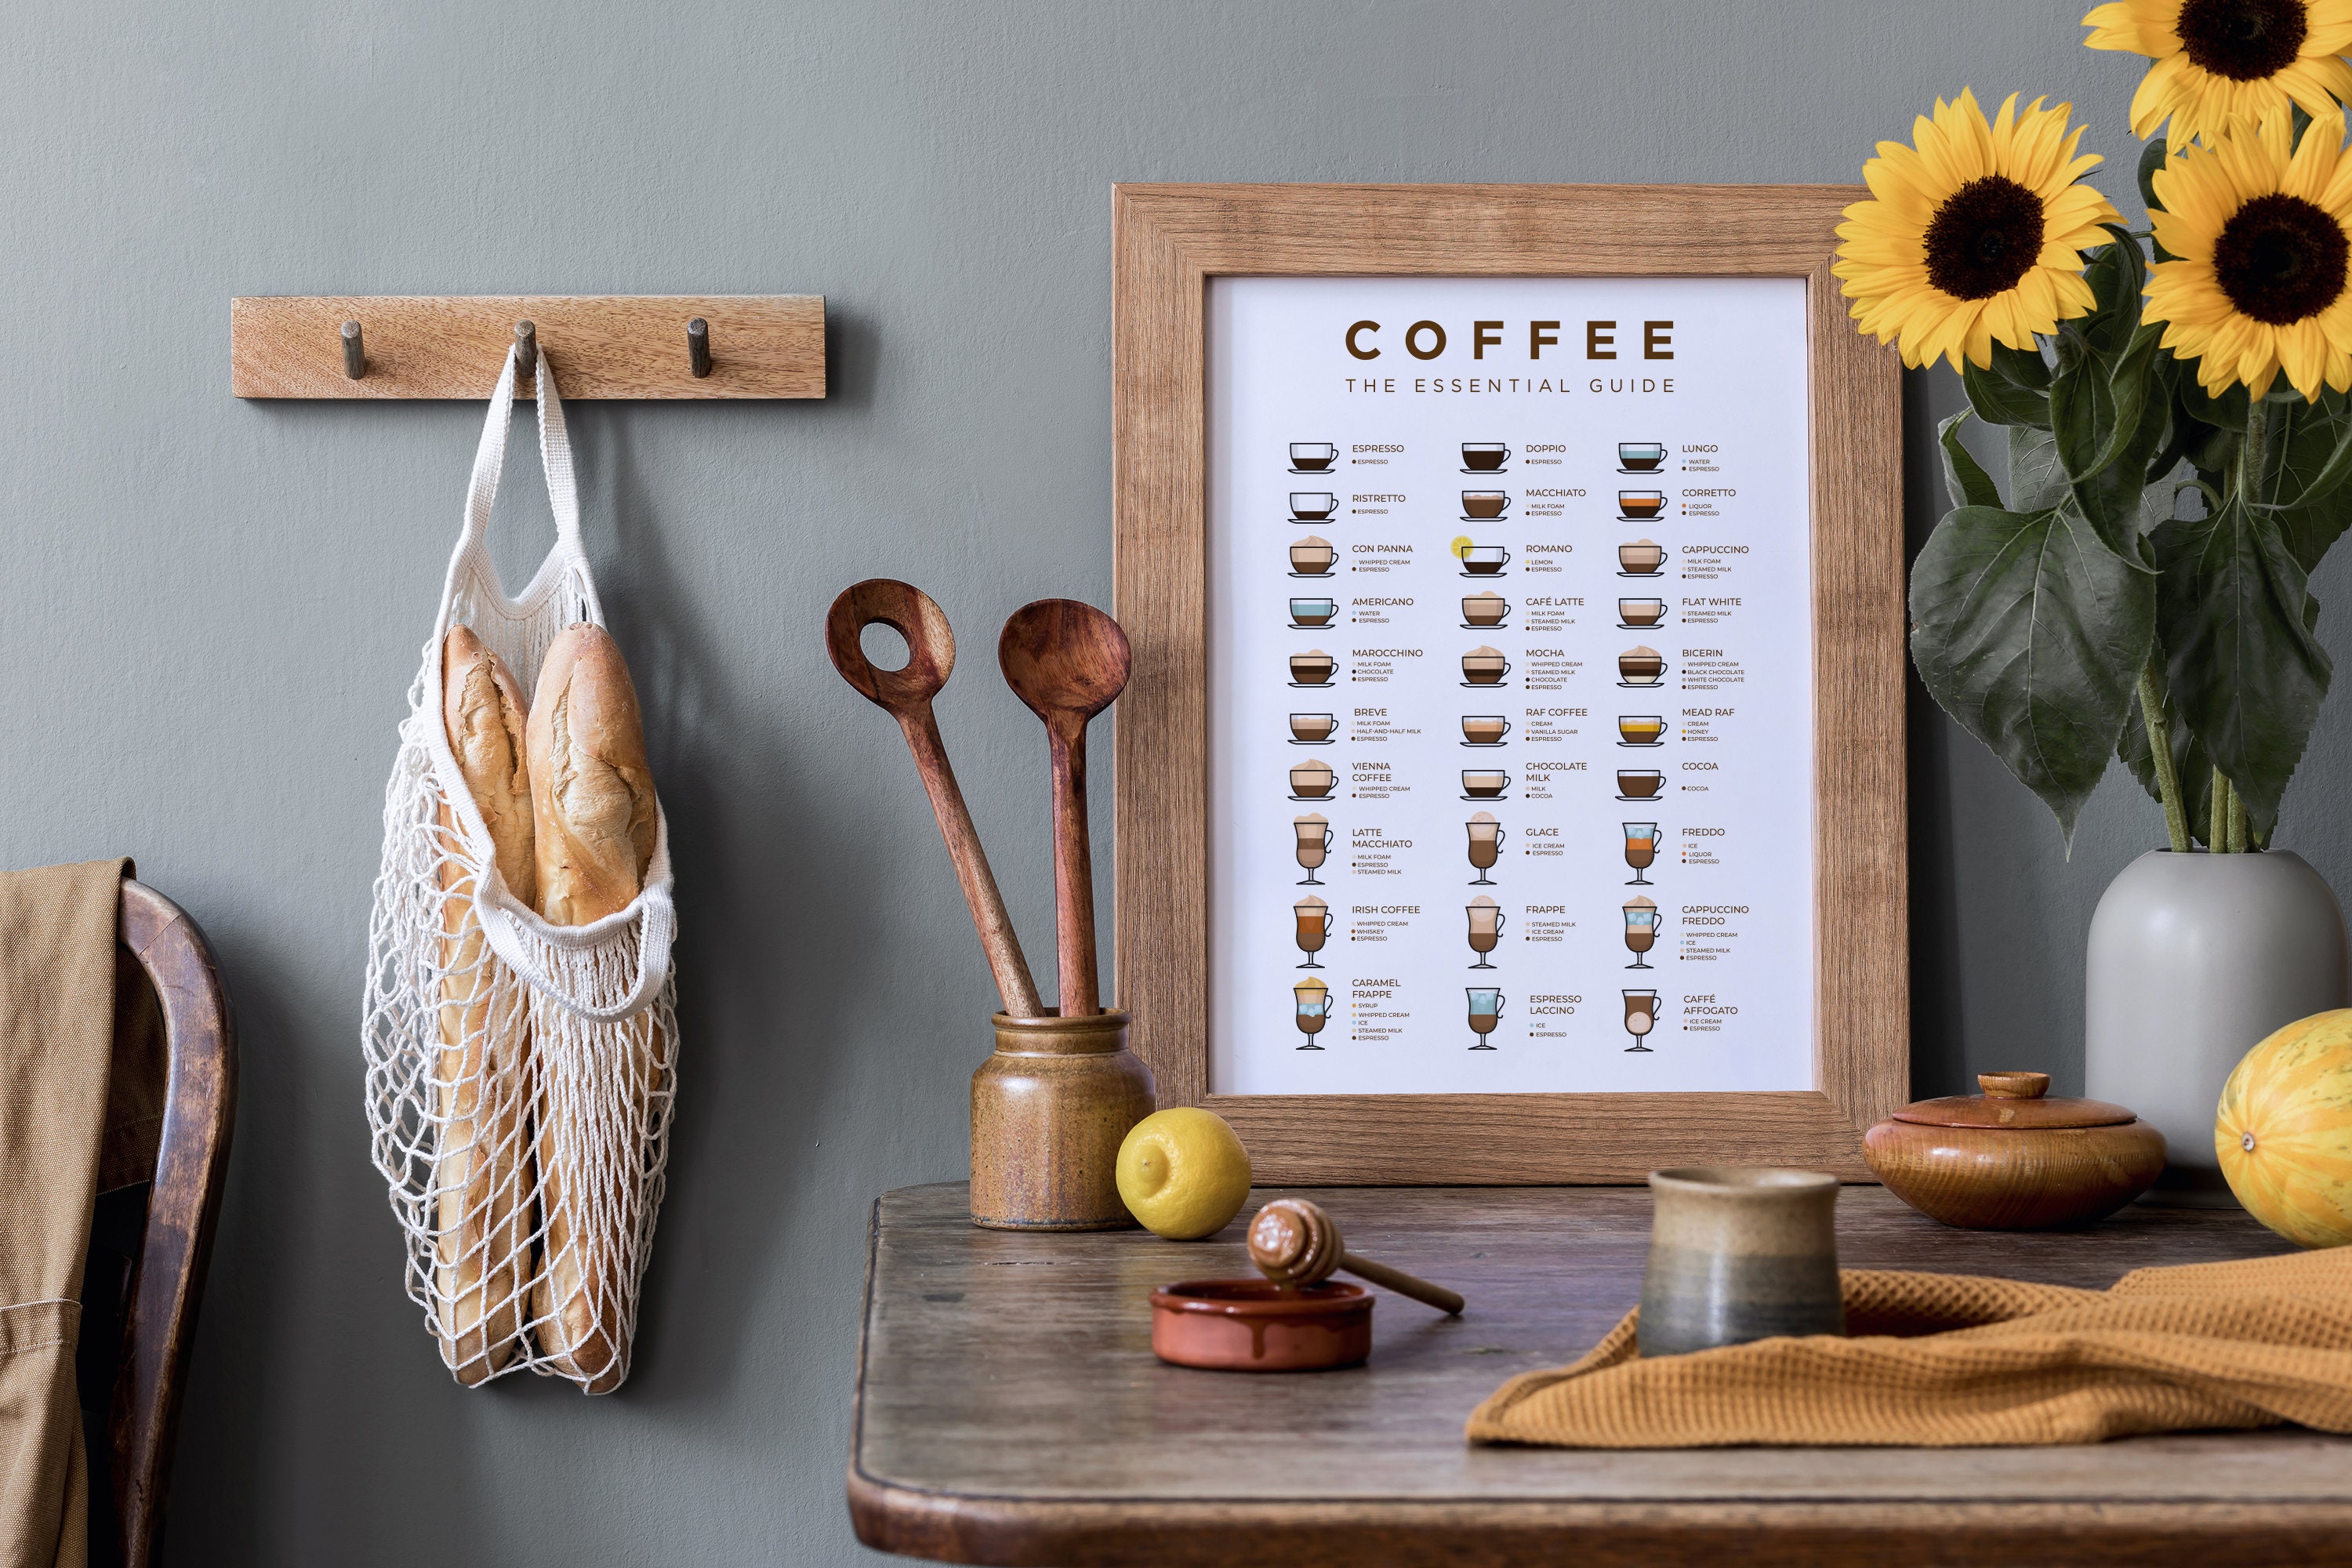 Essential Coffee Guide Print, Coffee Types Art, Coffee House Menu Art,  Latte, Filter Coffee, Espresso, Cappuccino, Americano, Macchiato Art 